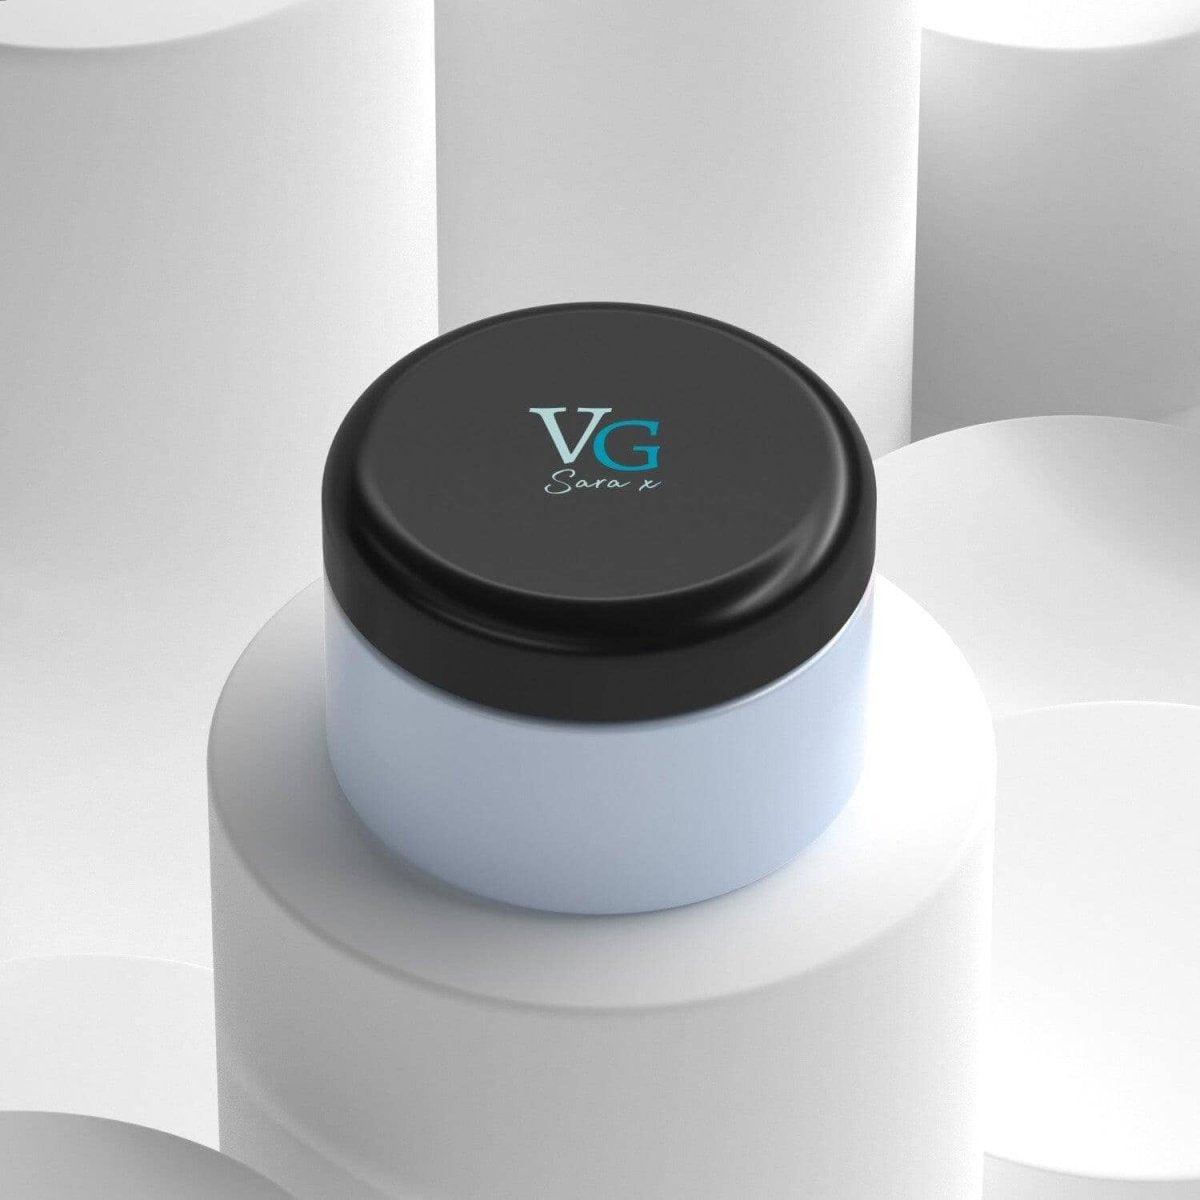 Jar of Face & Body Hydrant cream on a pristine white tabletop